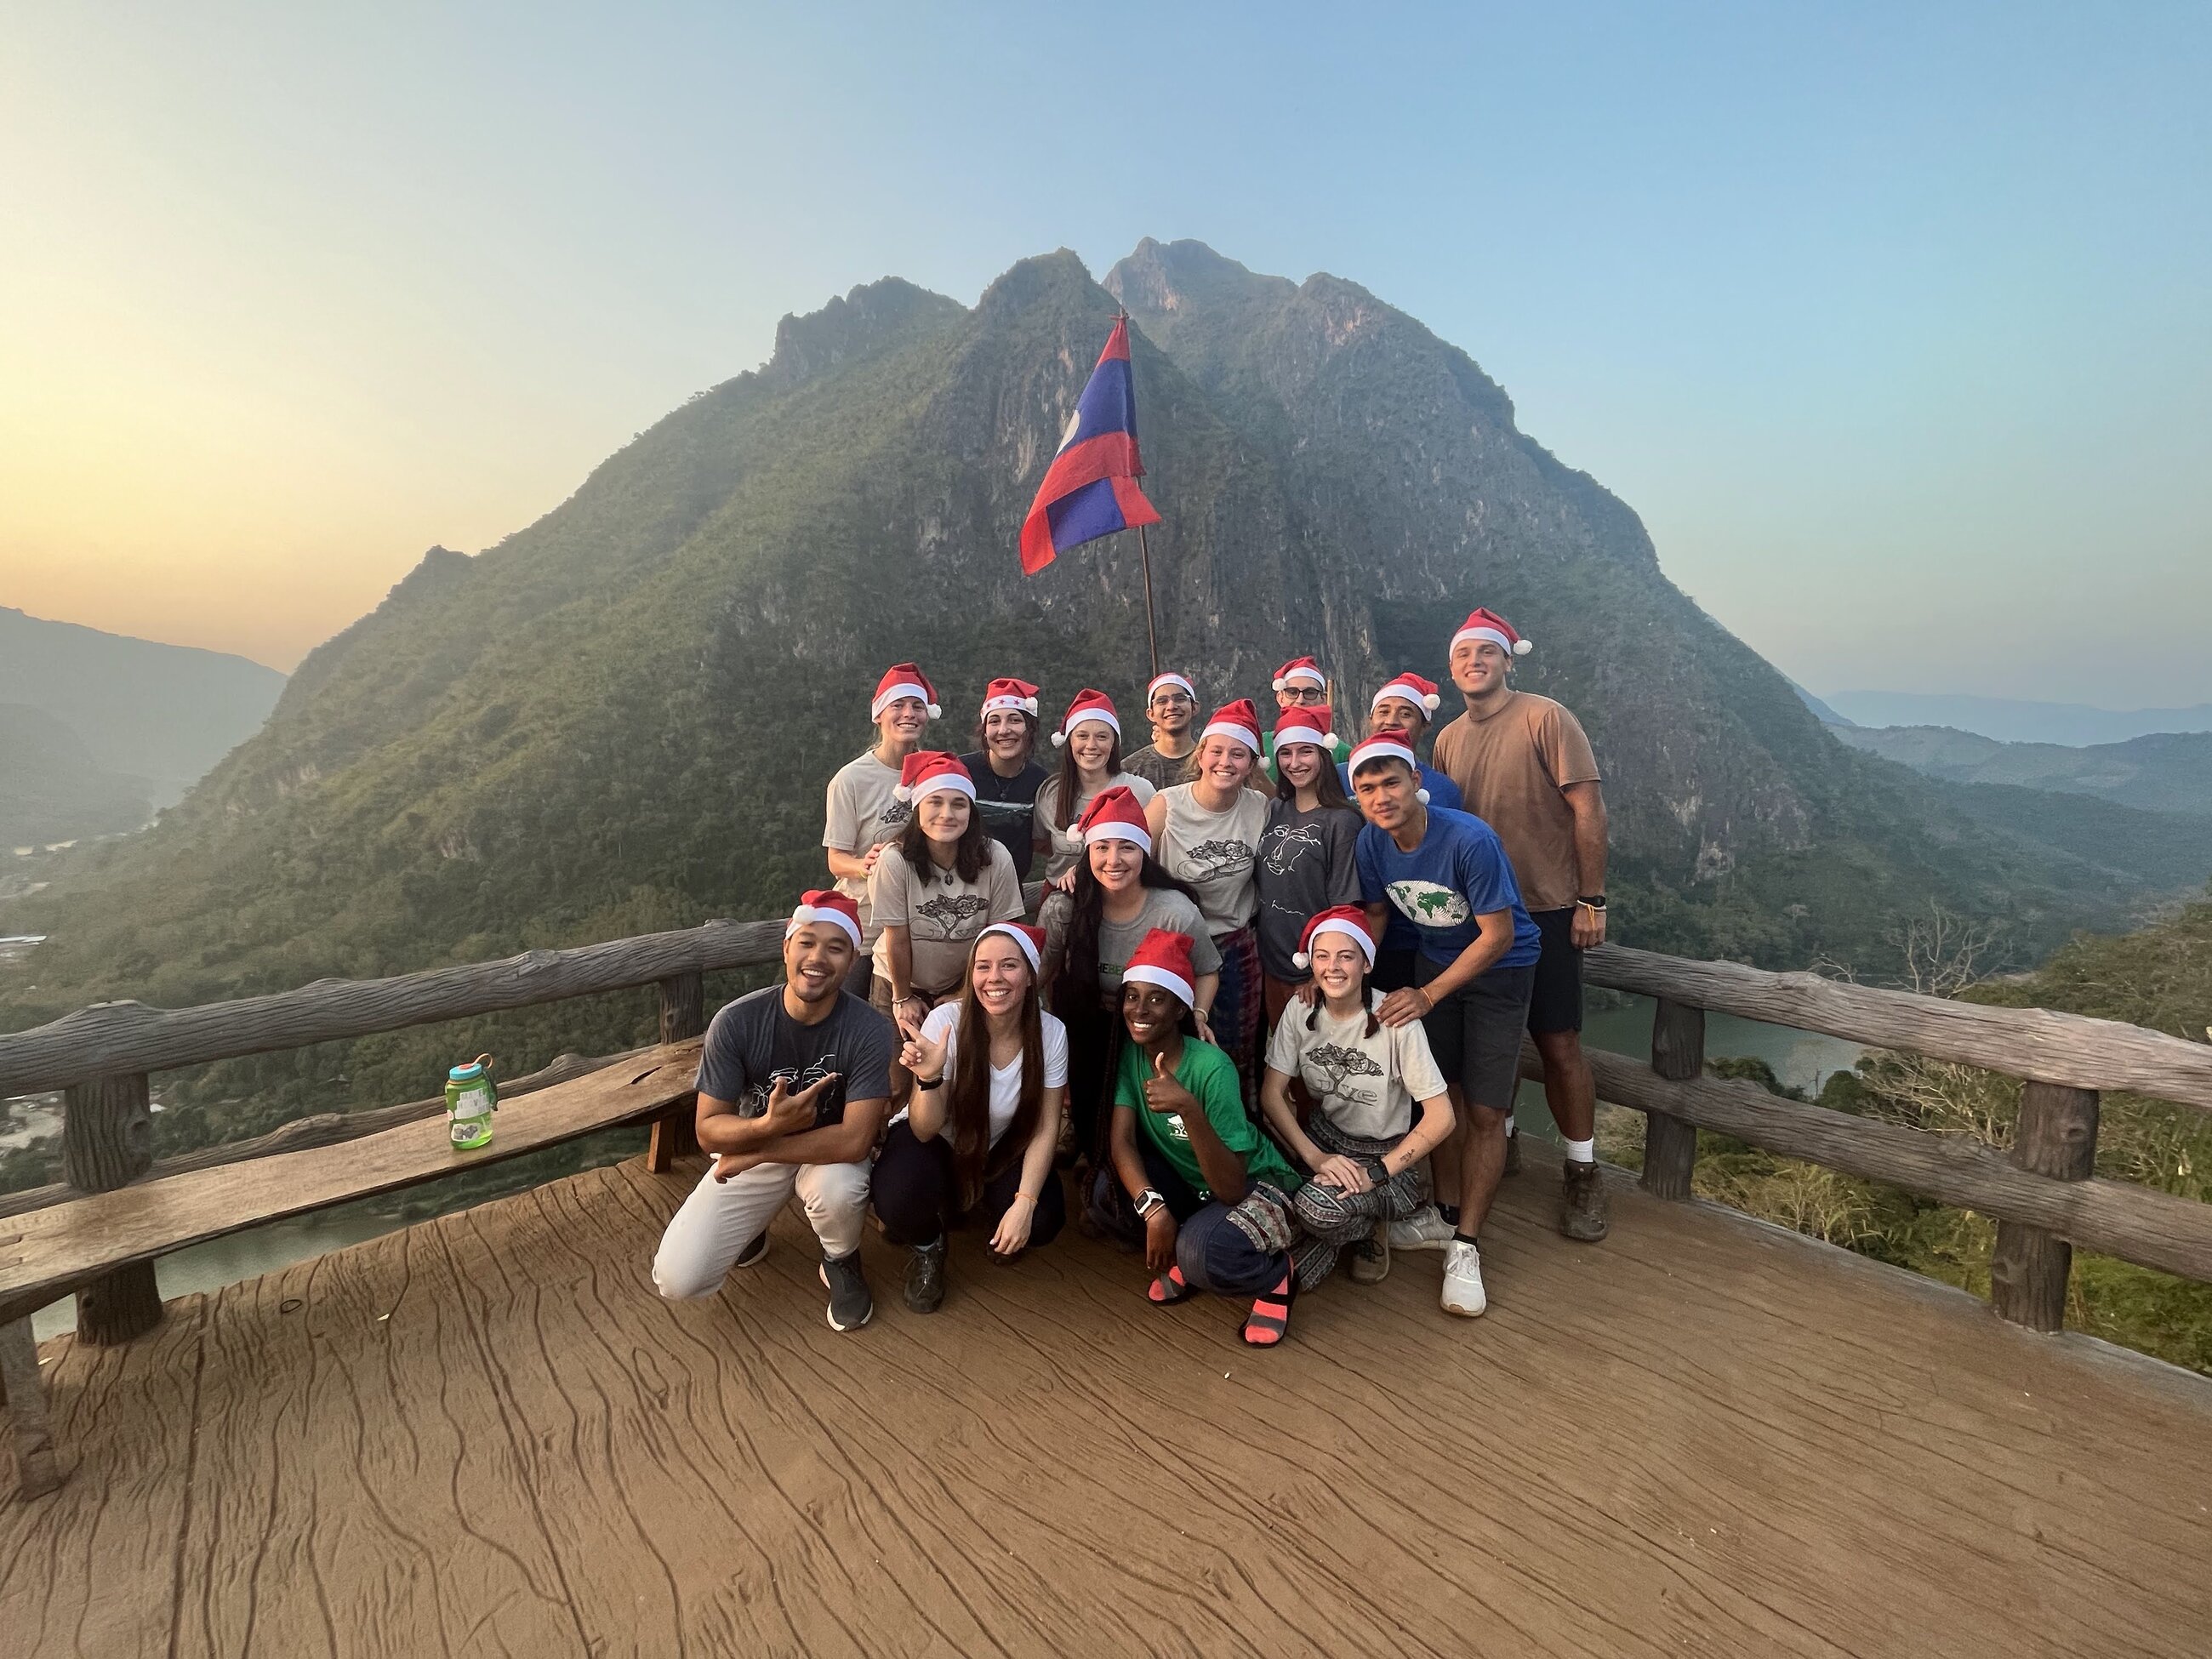 Christmas in Laos!